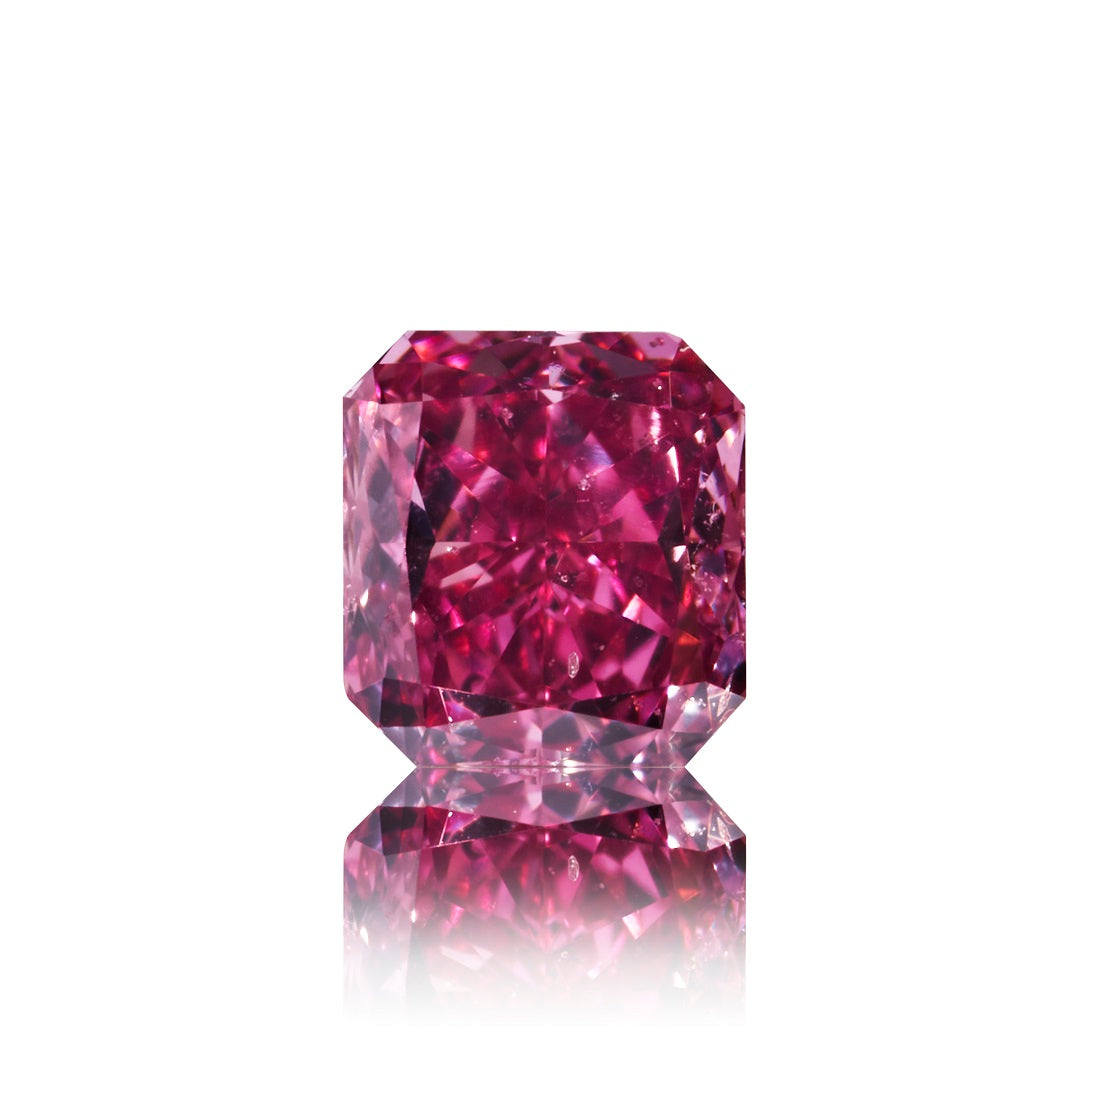 0,12 carat radiant cut Natural Fancy Vivid Purplish Pink diamant.   GIA certifikat medfølger. 